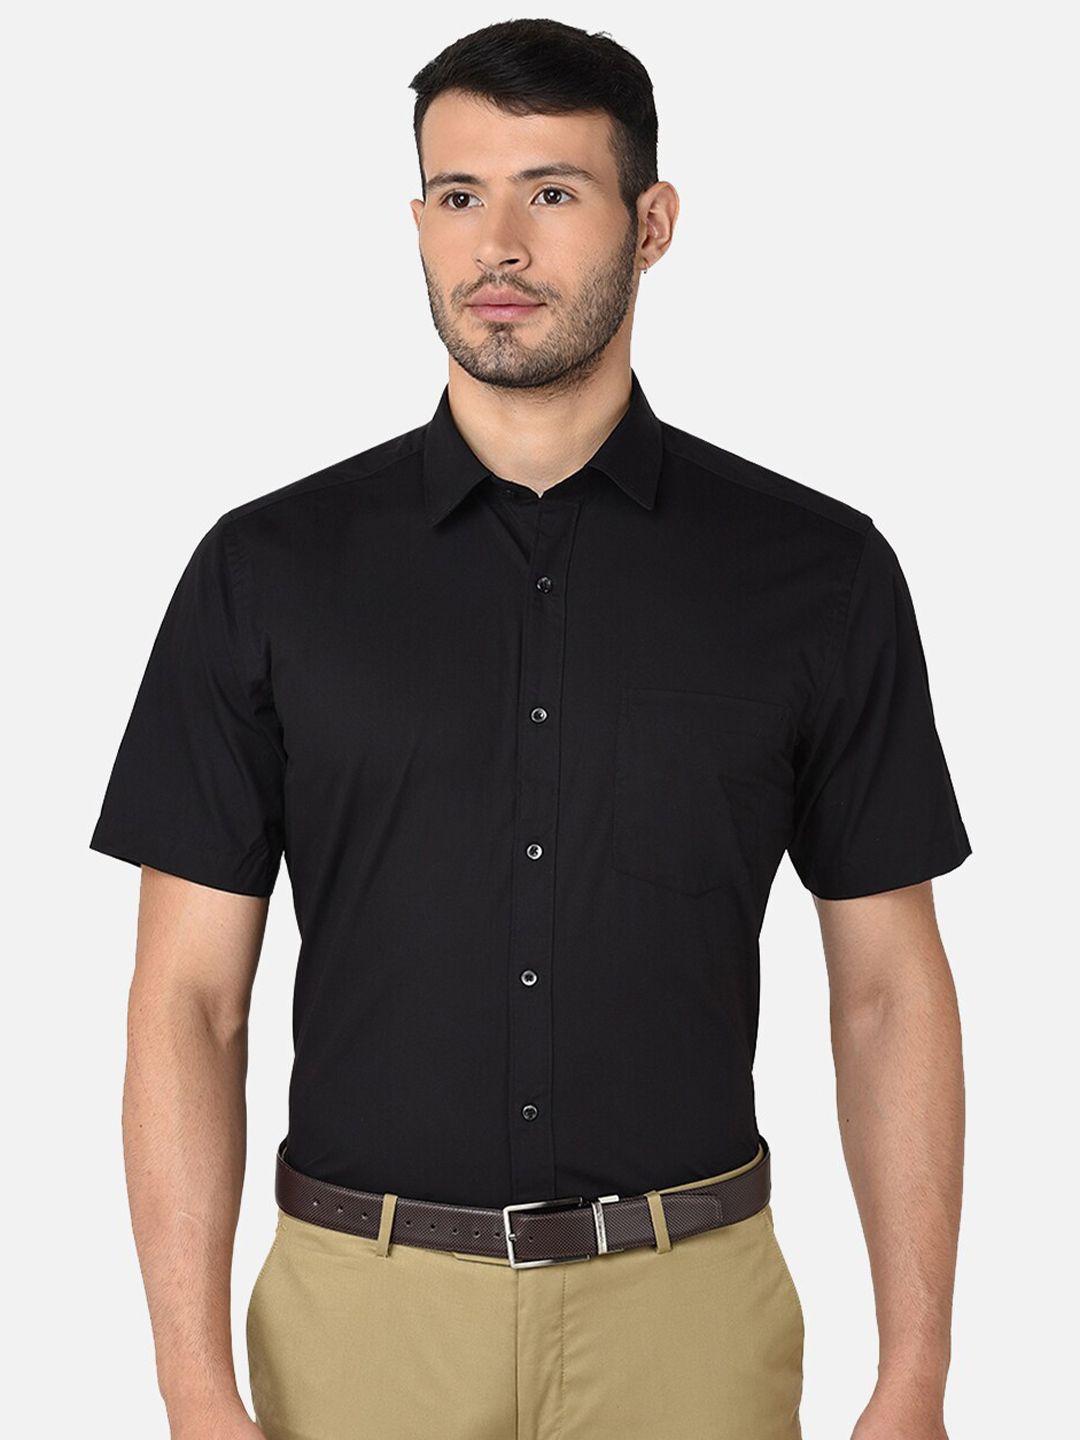 oxemberg men black solid classic formal shirt